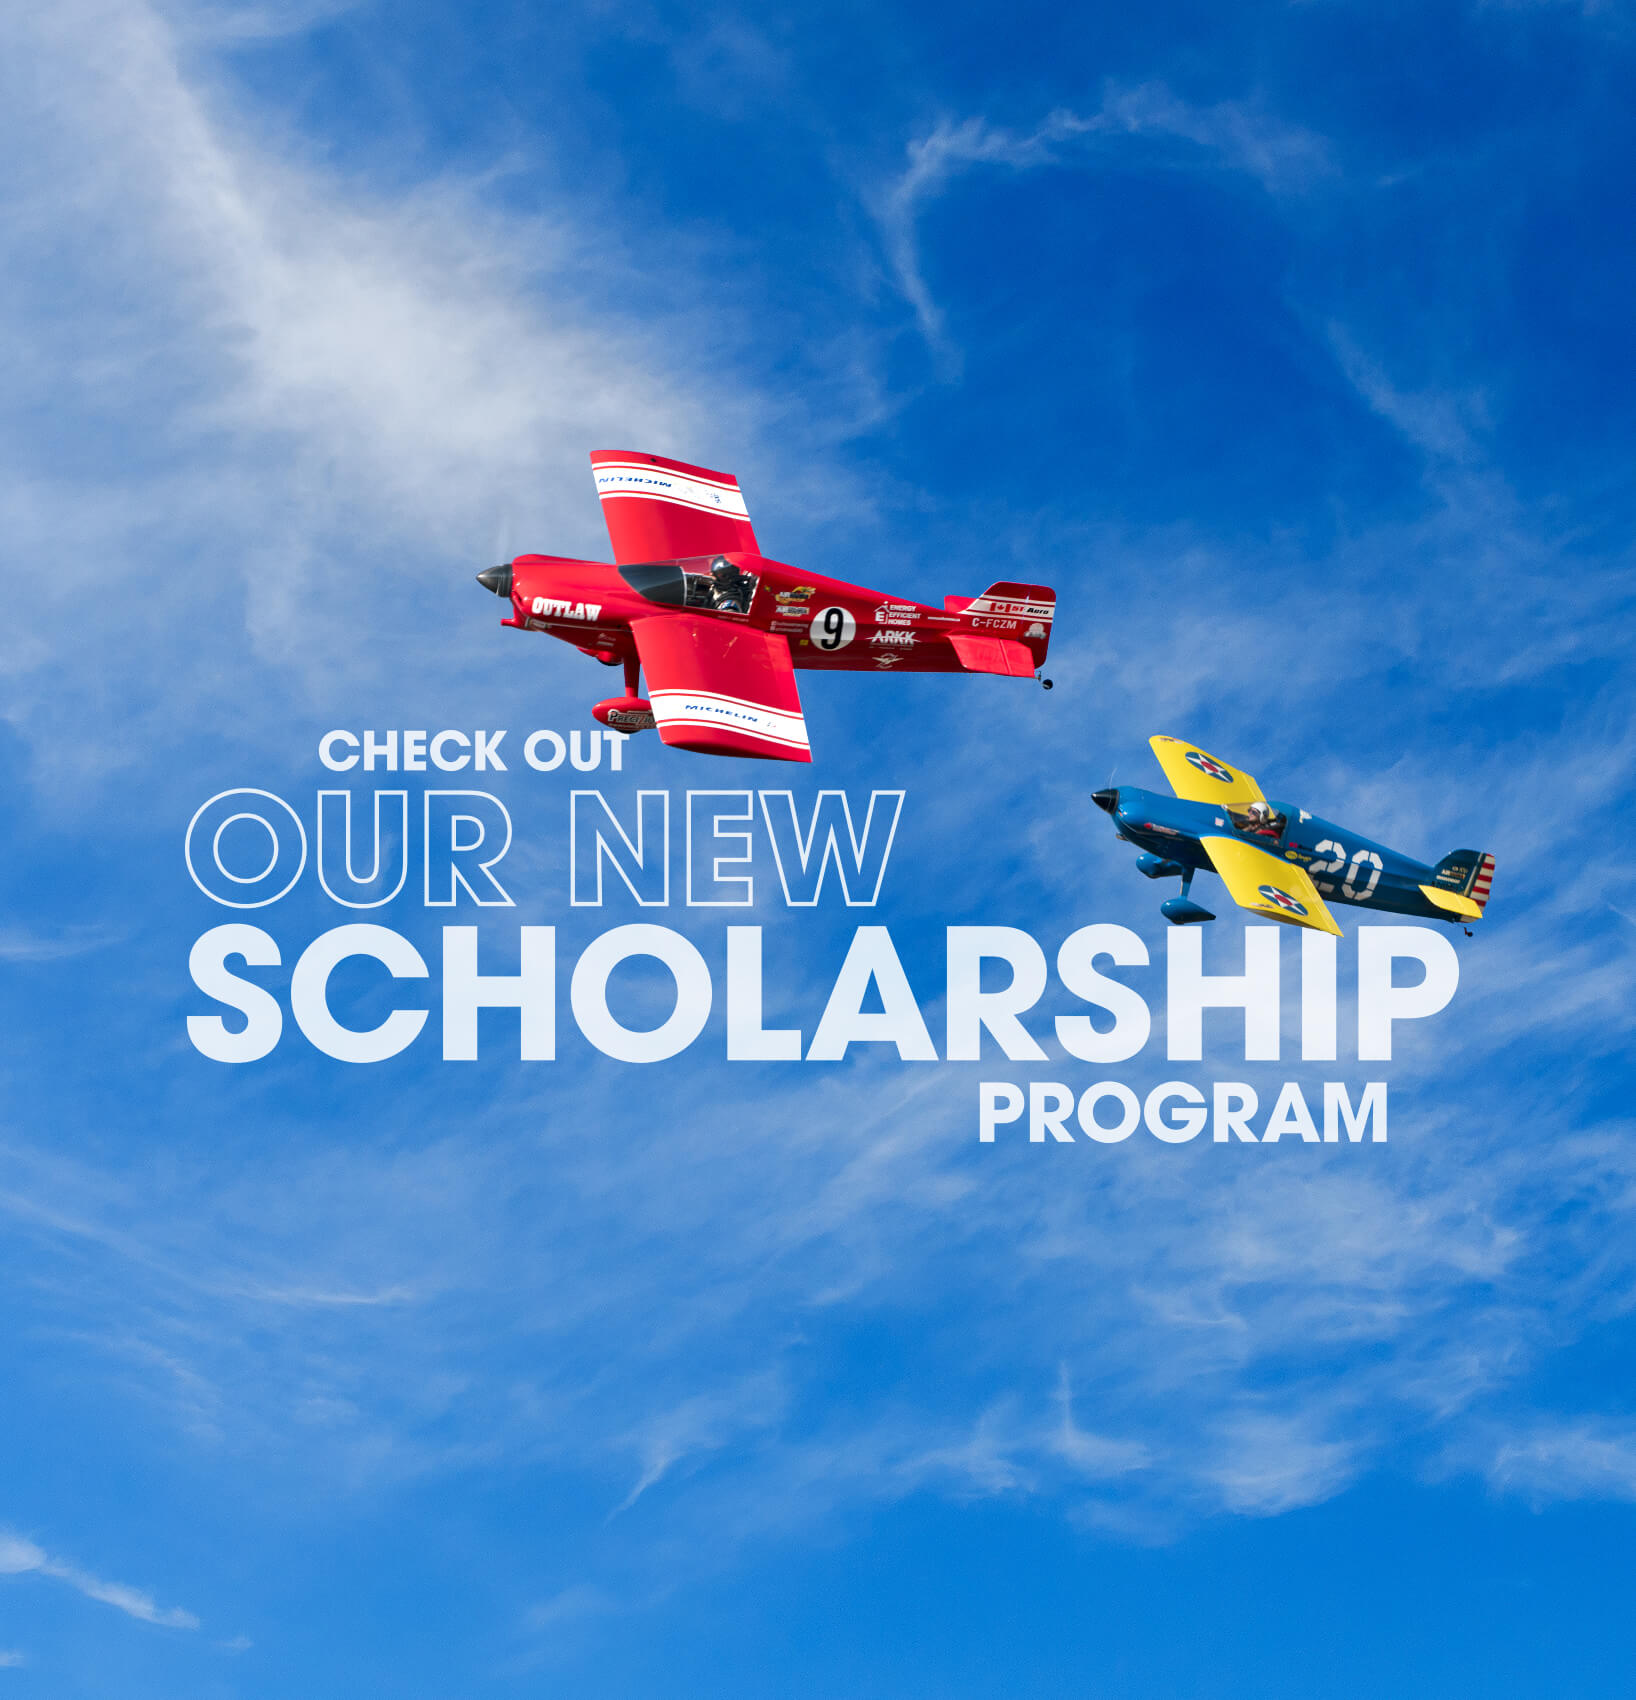 Reno Air Racing Association Flight Scholarship Application Window Opens Dec. 1